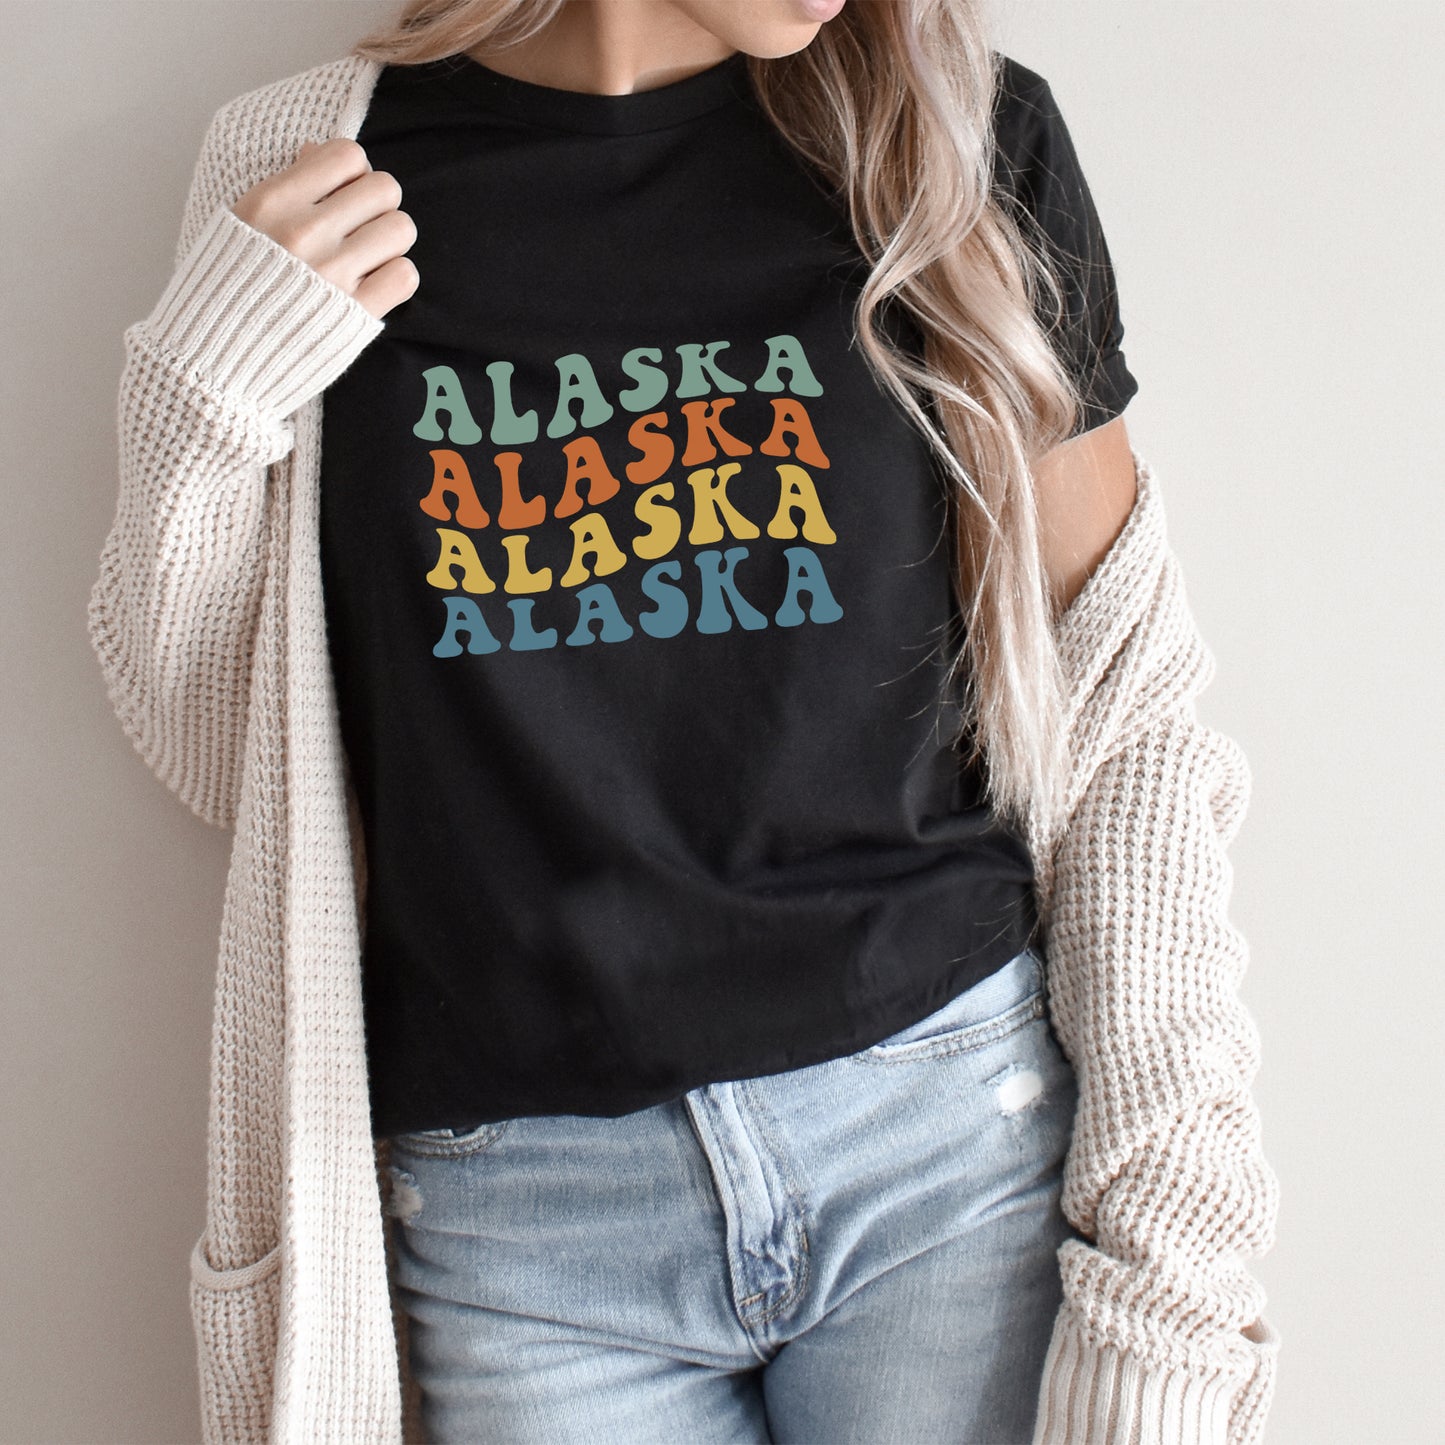 Alaska Retro Wavy | Short Sleeve Graphic Tee